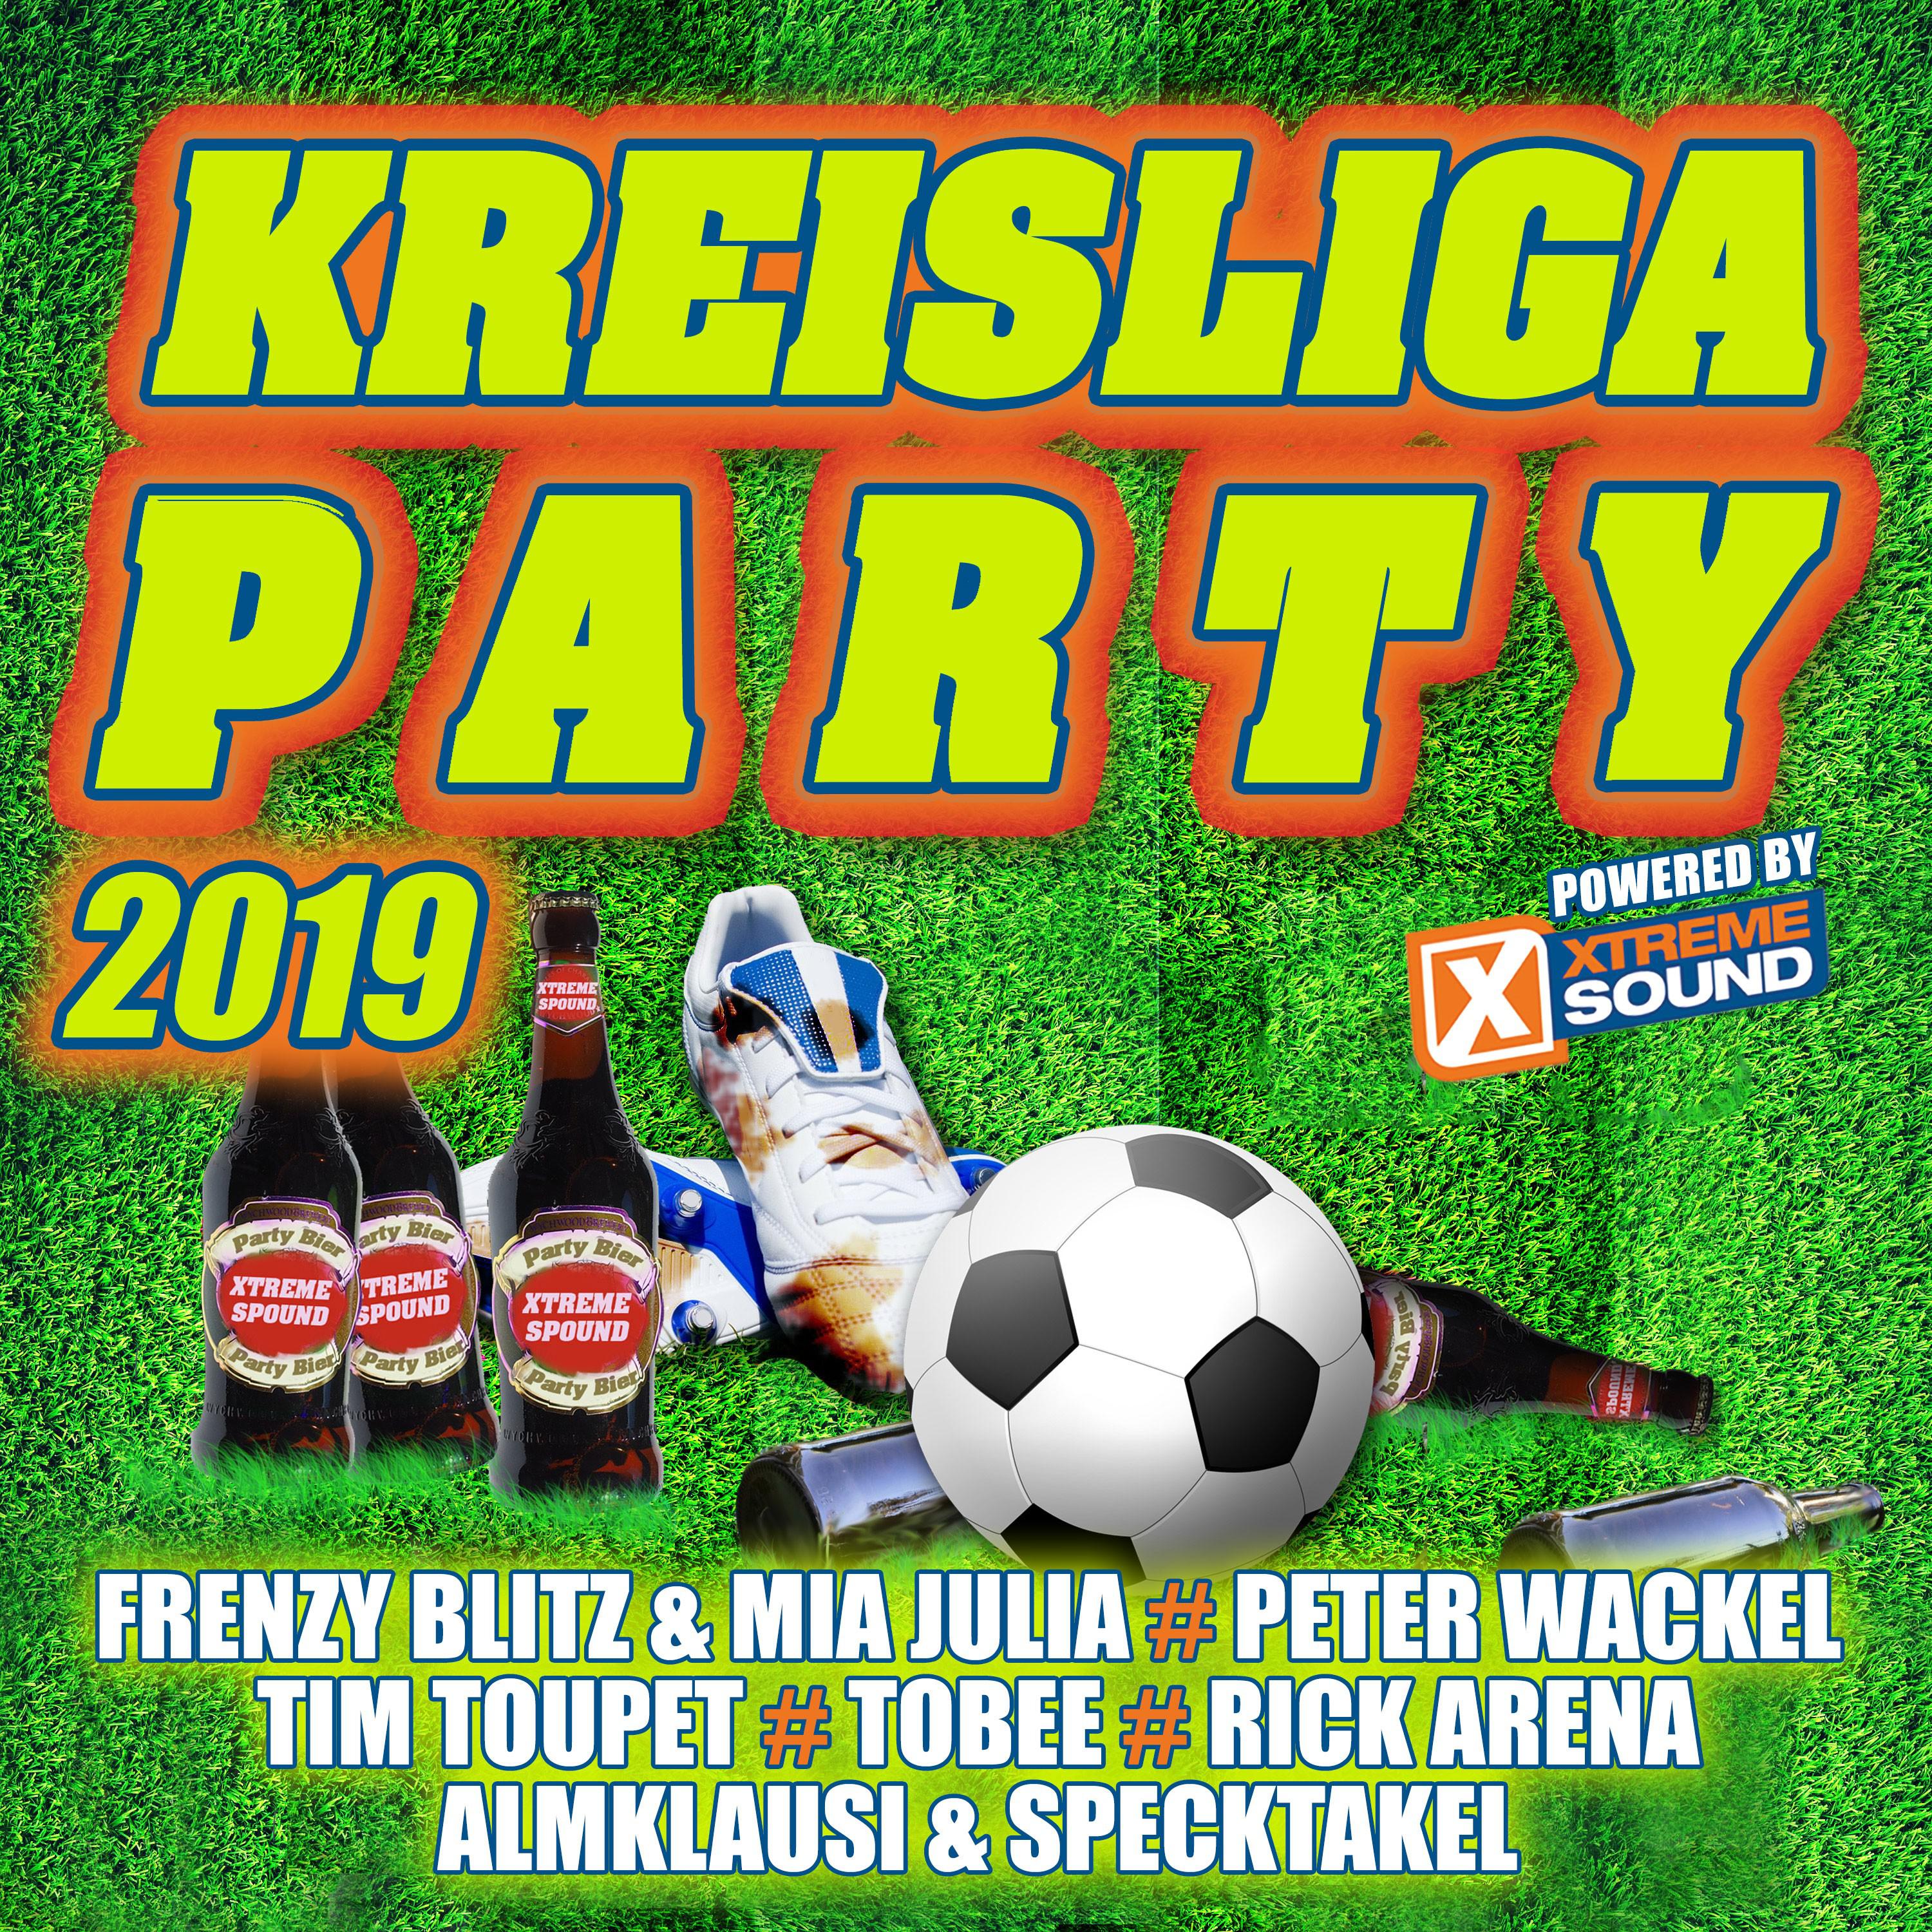 Kreisliga Party 2019 powered by Xtreme Sound